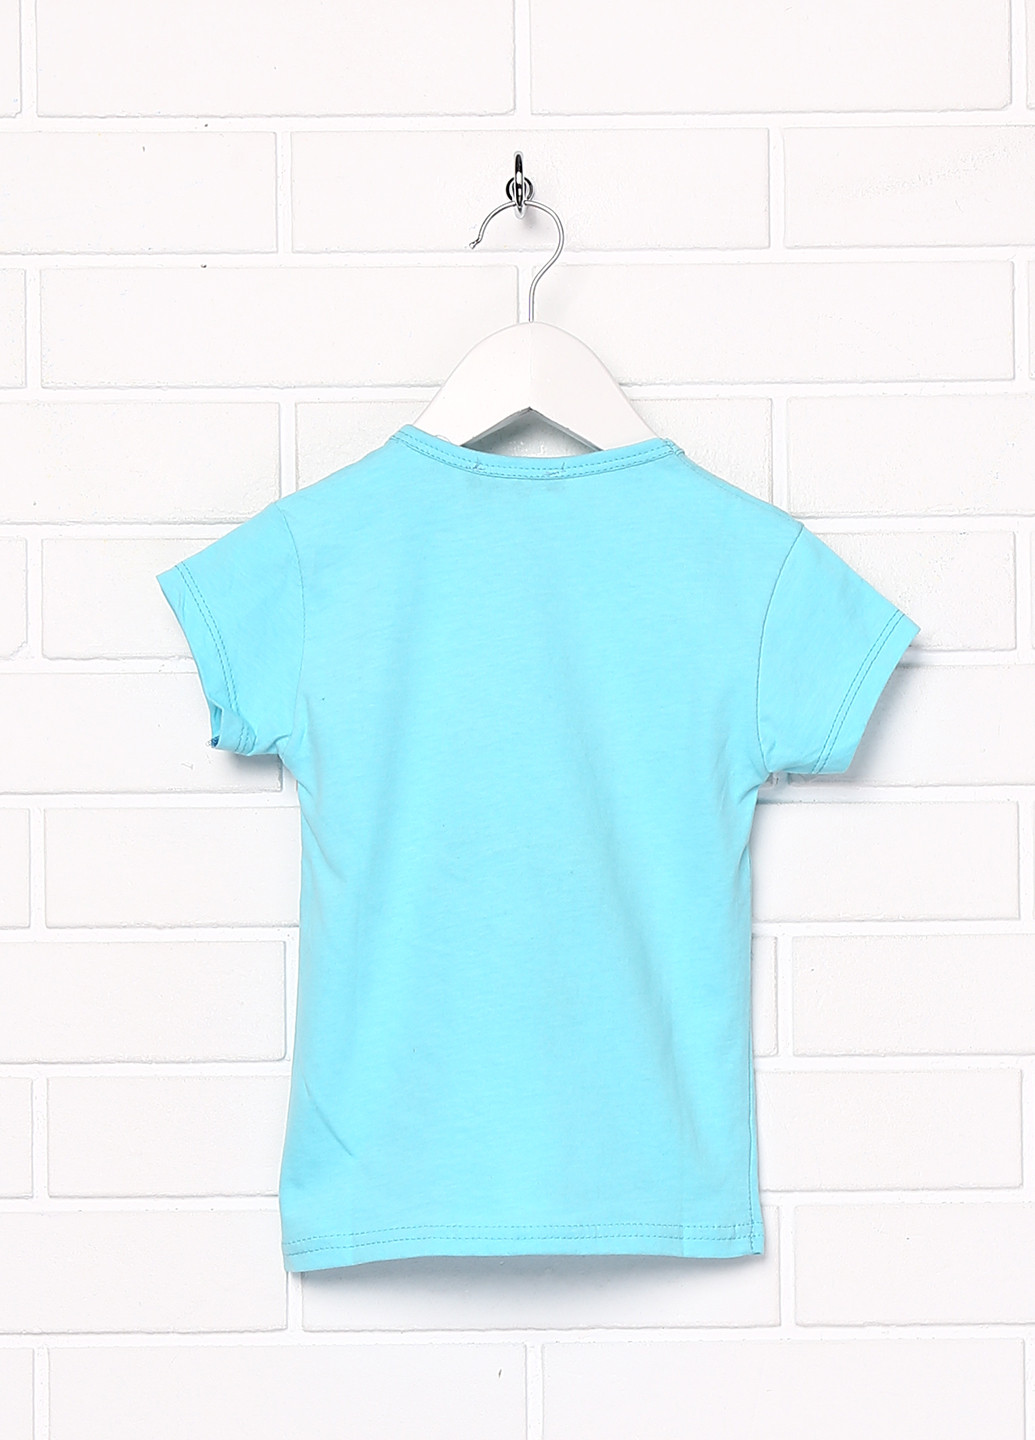 Голубая летняя футболка с коротким рукавом Dofa Kids